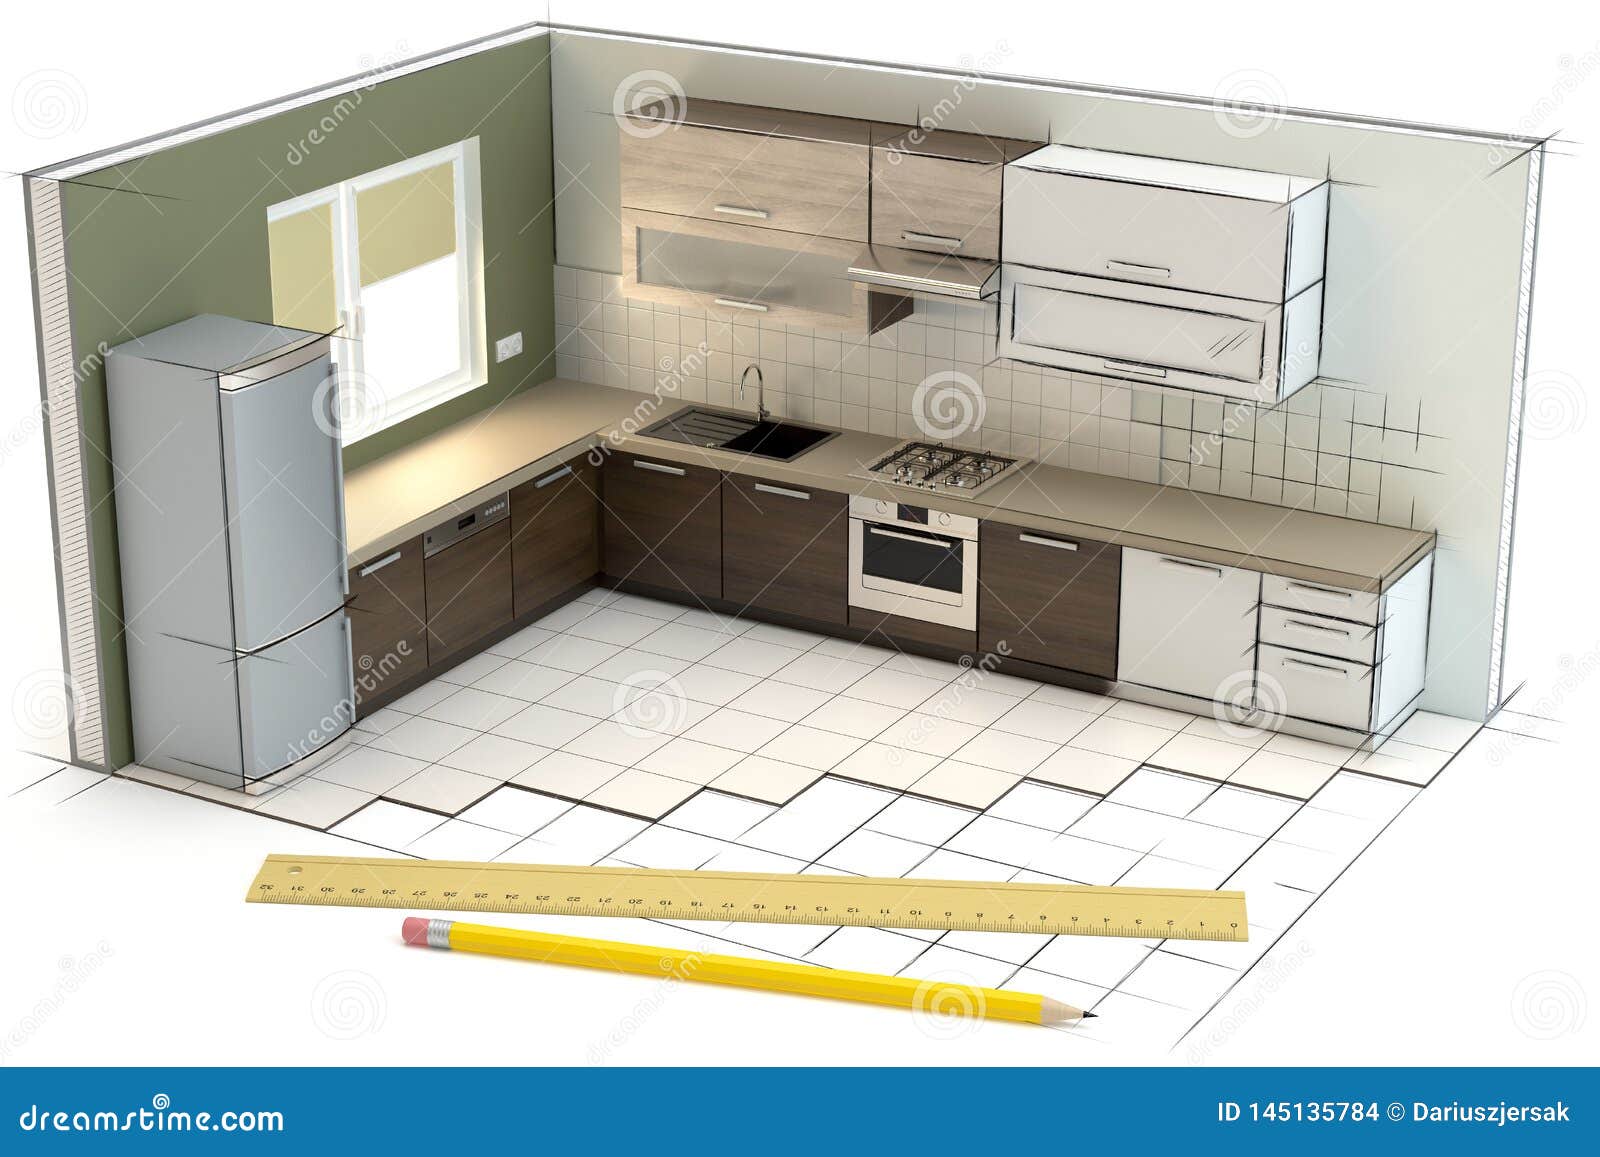 Project of the Kitchen, 3D Illustration Stock Illustration ...